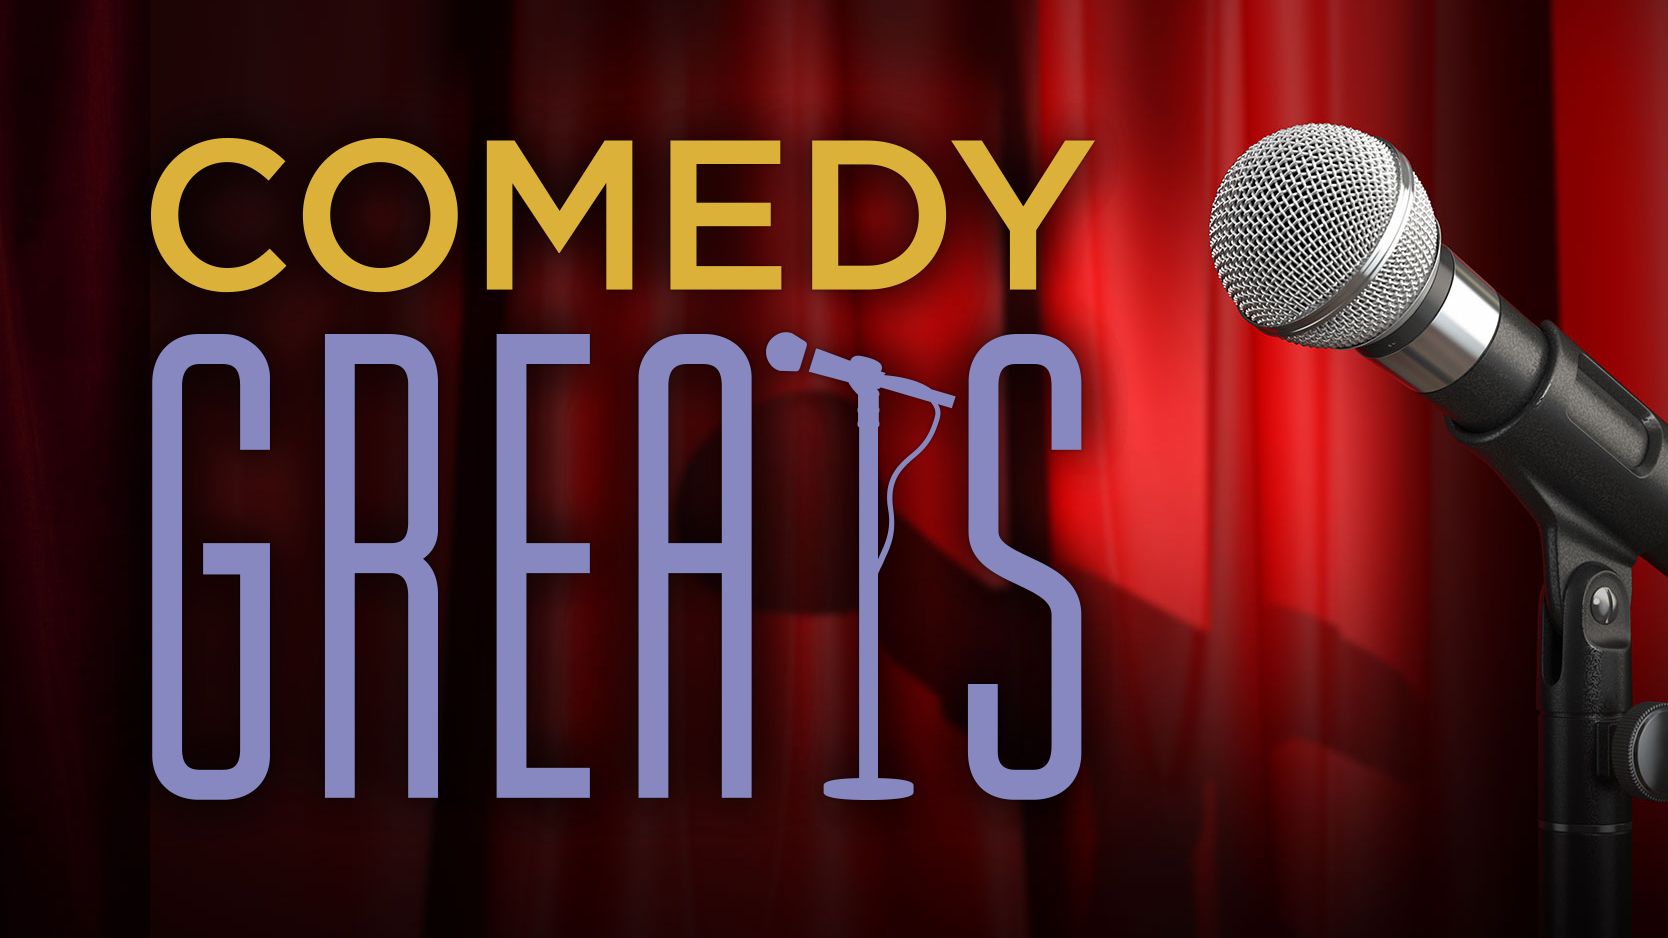 Comedy Greats on SiriusXM